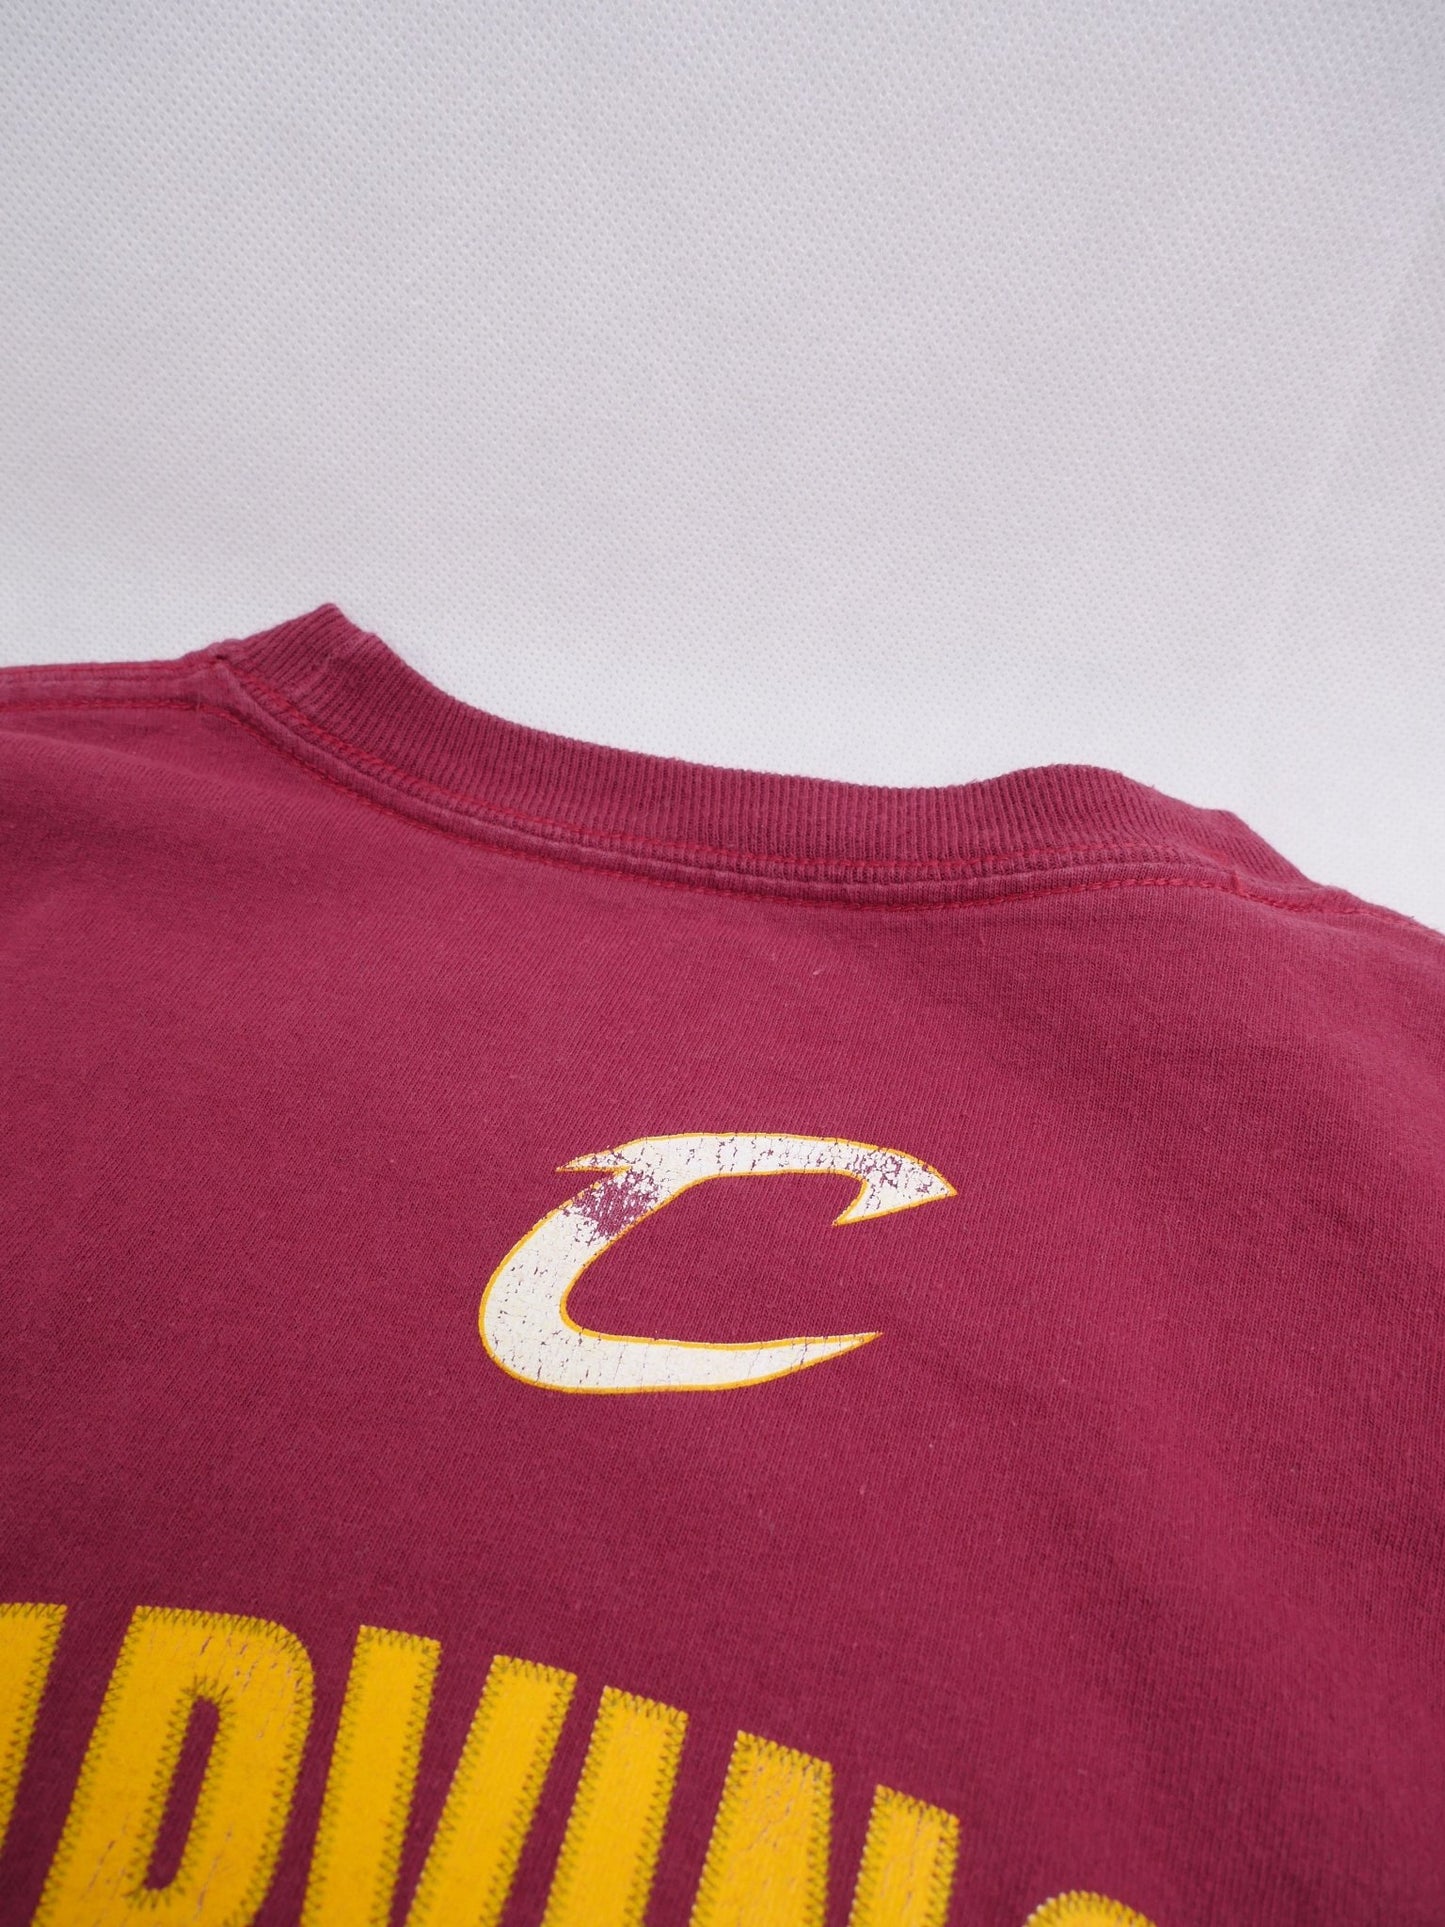 adidas NBA Cleveland Cavaliers Iriving printed Logo Shirt - Peeces